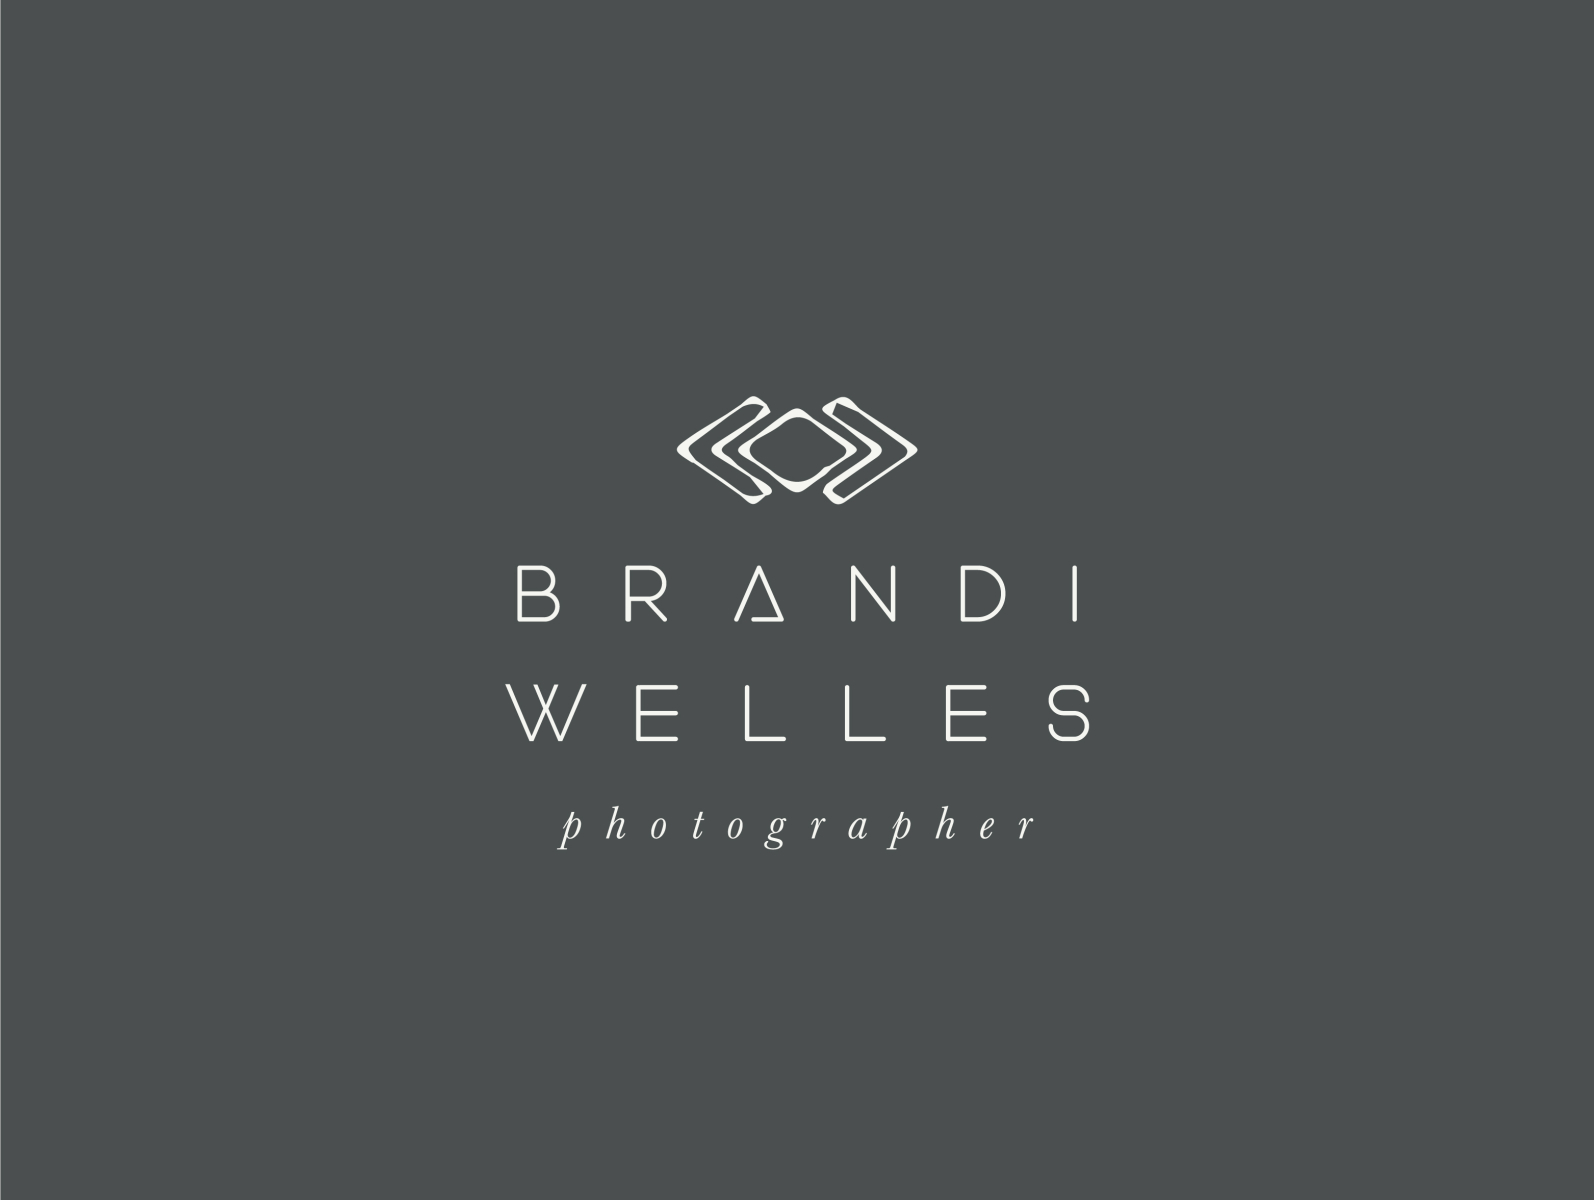 Brandi Welles Photographer Logo by Kadie Smith on Dribbble